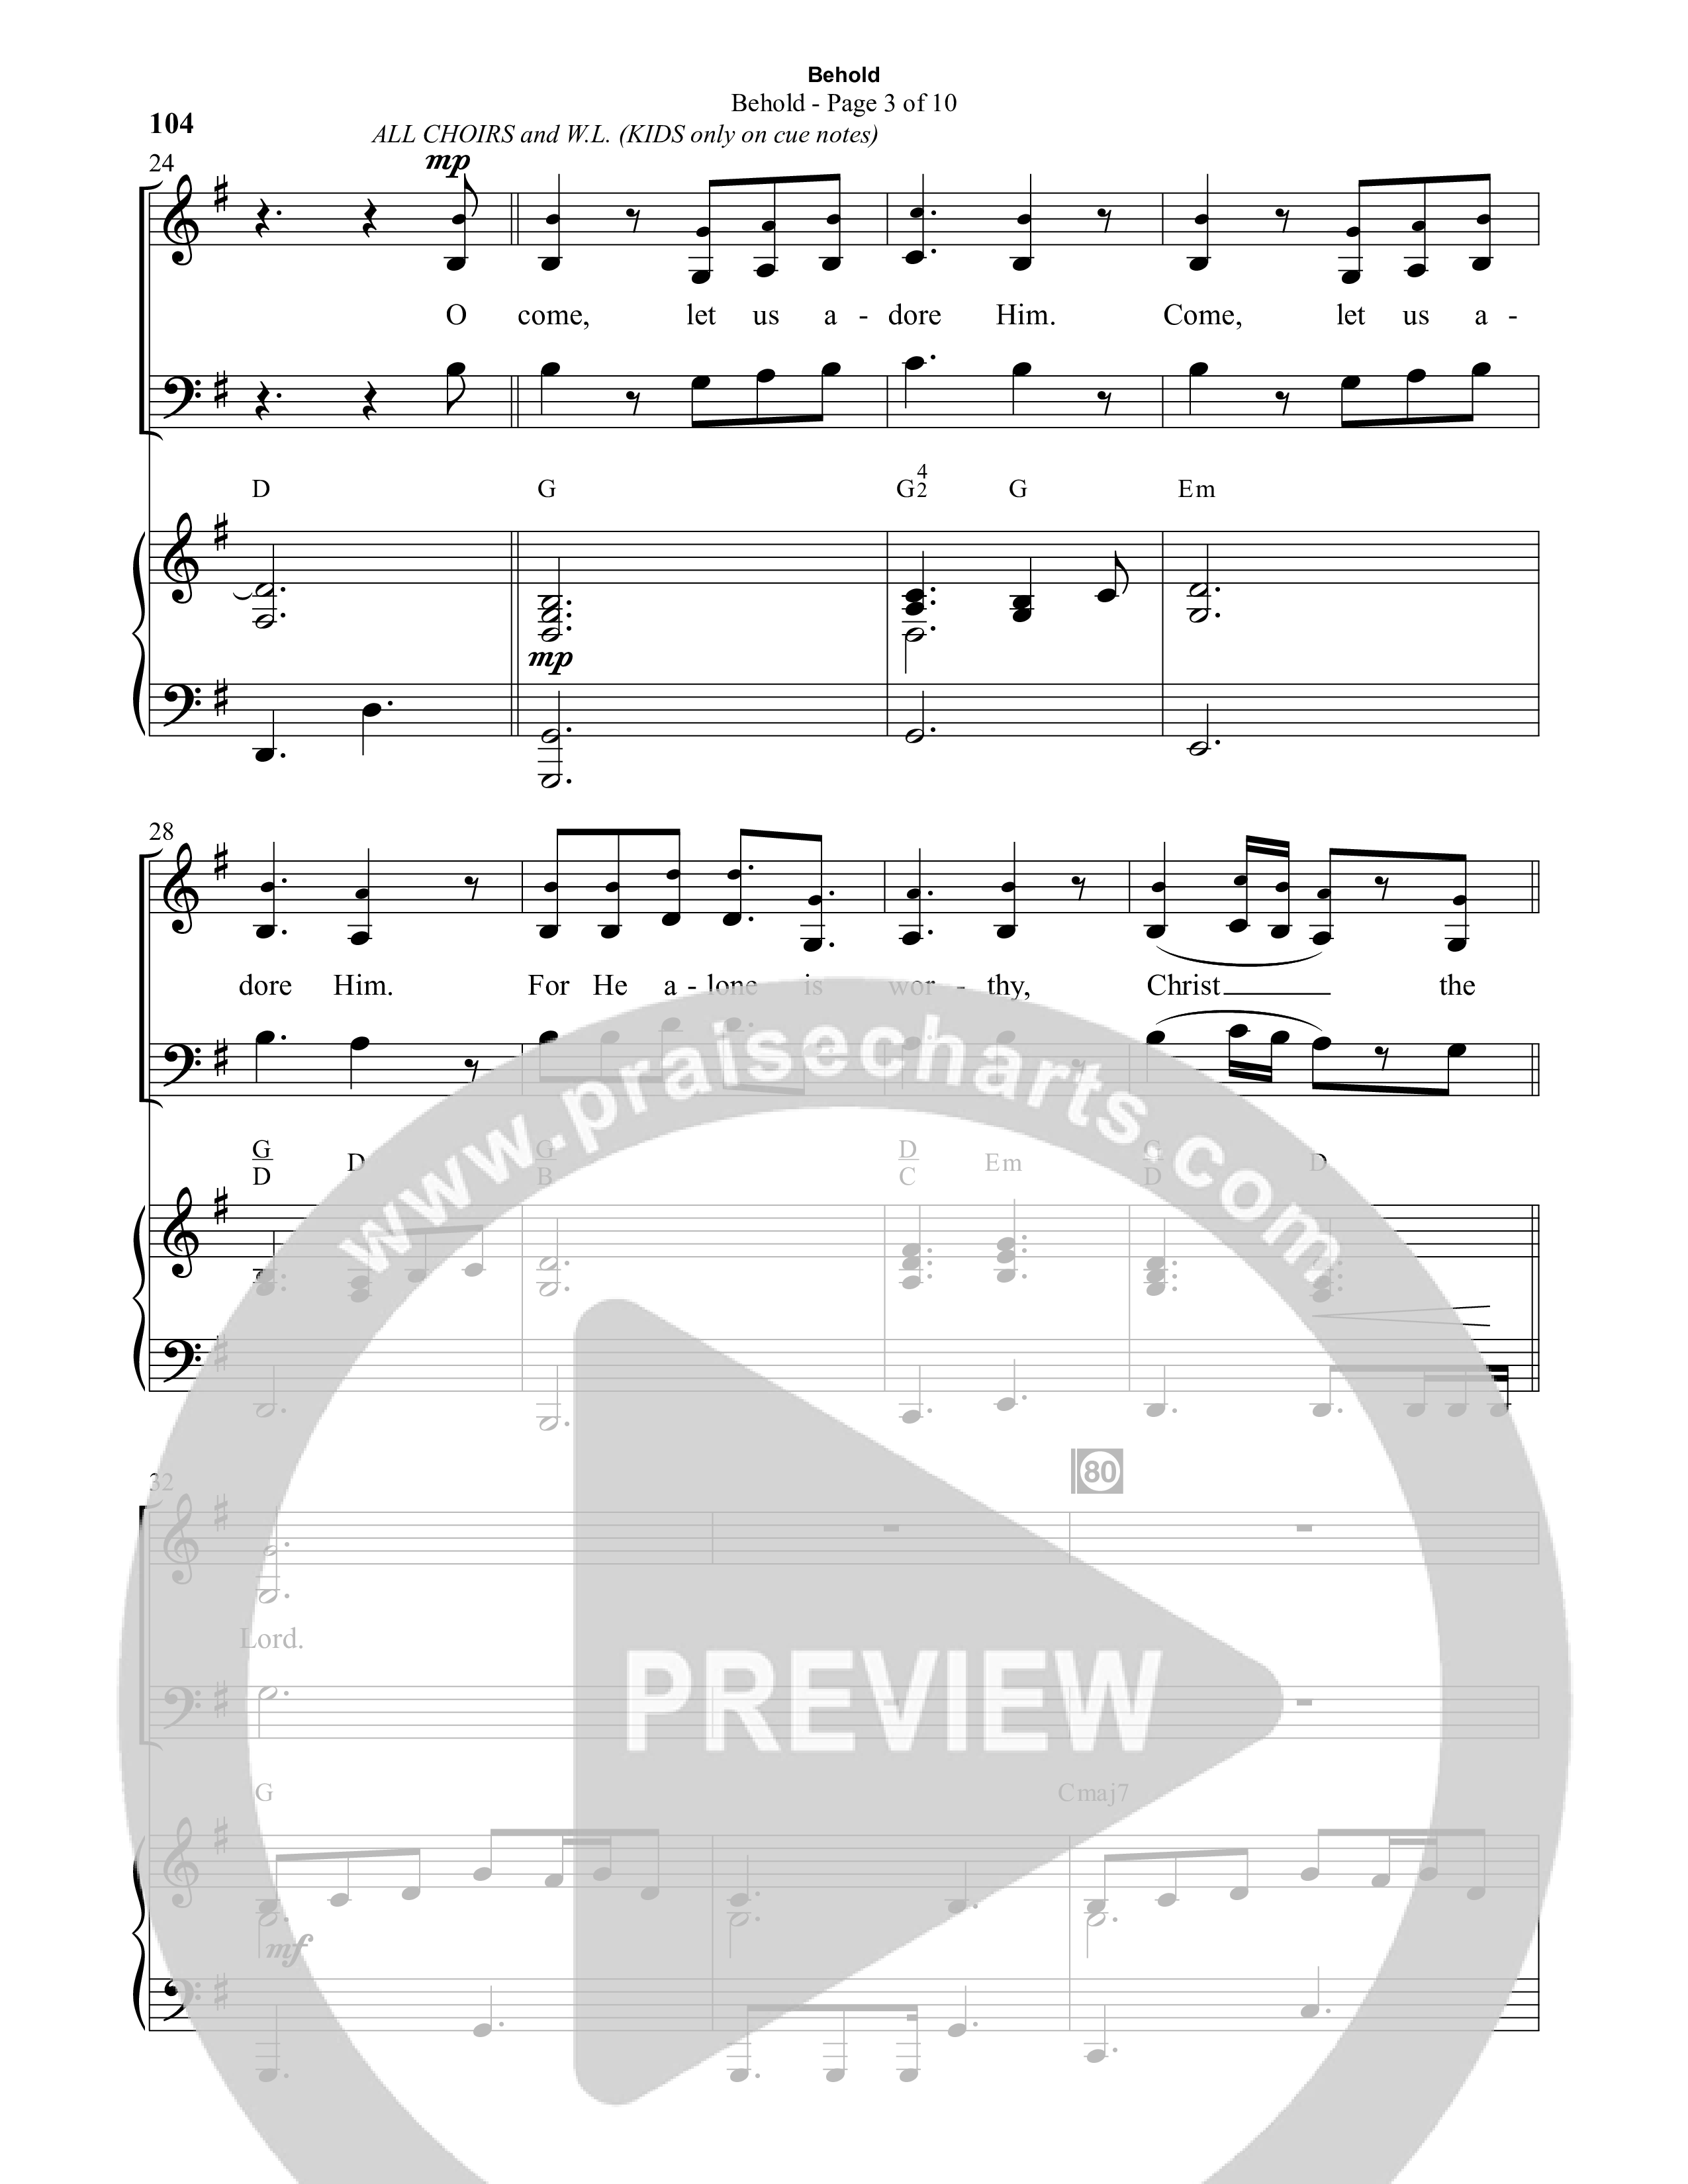 Behold (9 Song Choral Collection) Song 7 (Piano SATB) (Semsen Music / Arr. John Bolin / Orch. Cliff Duren)